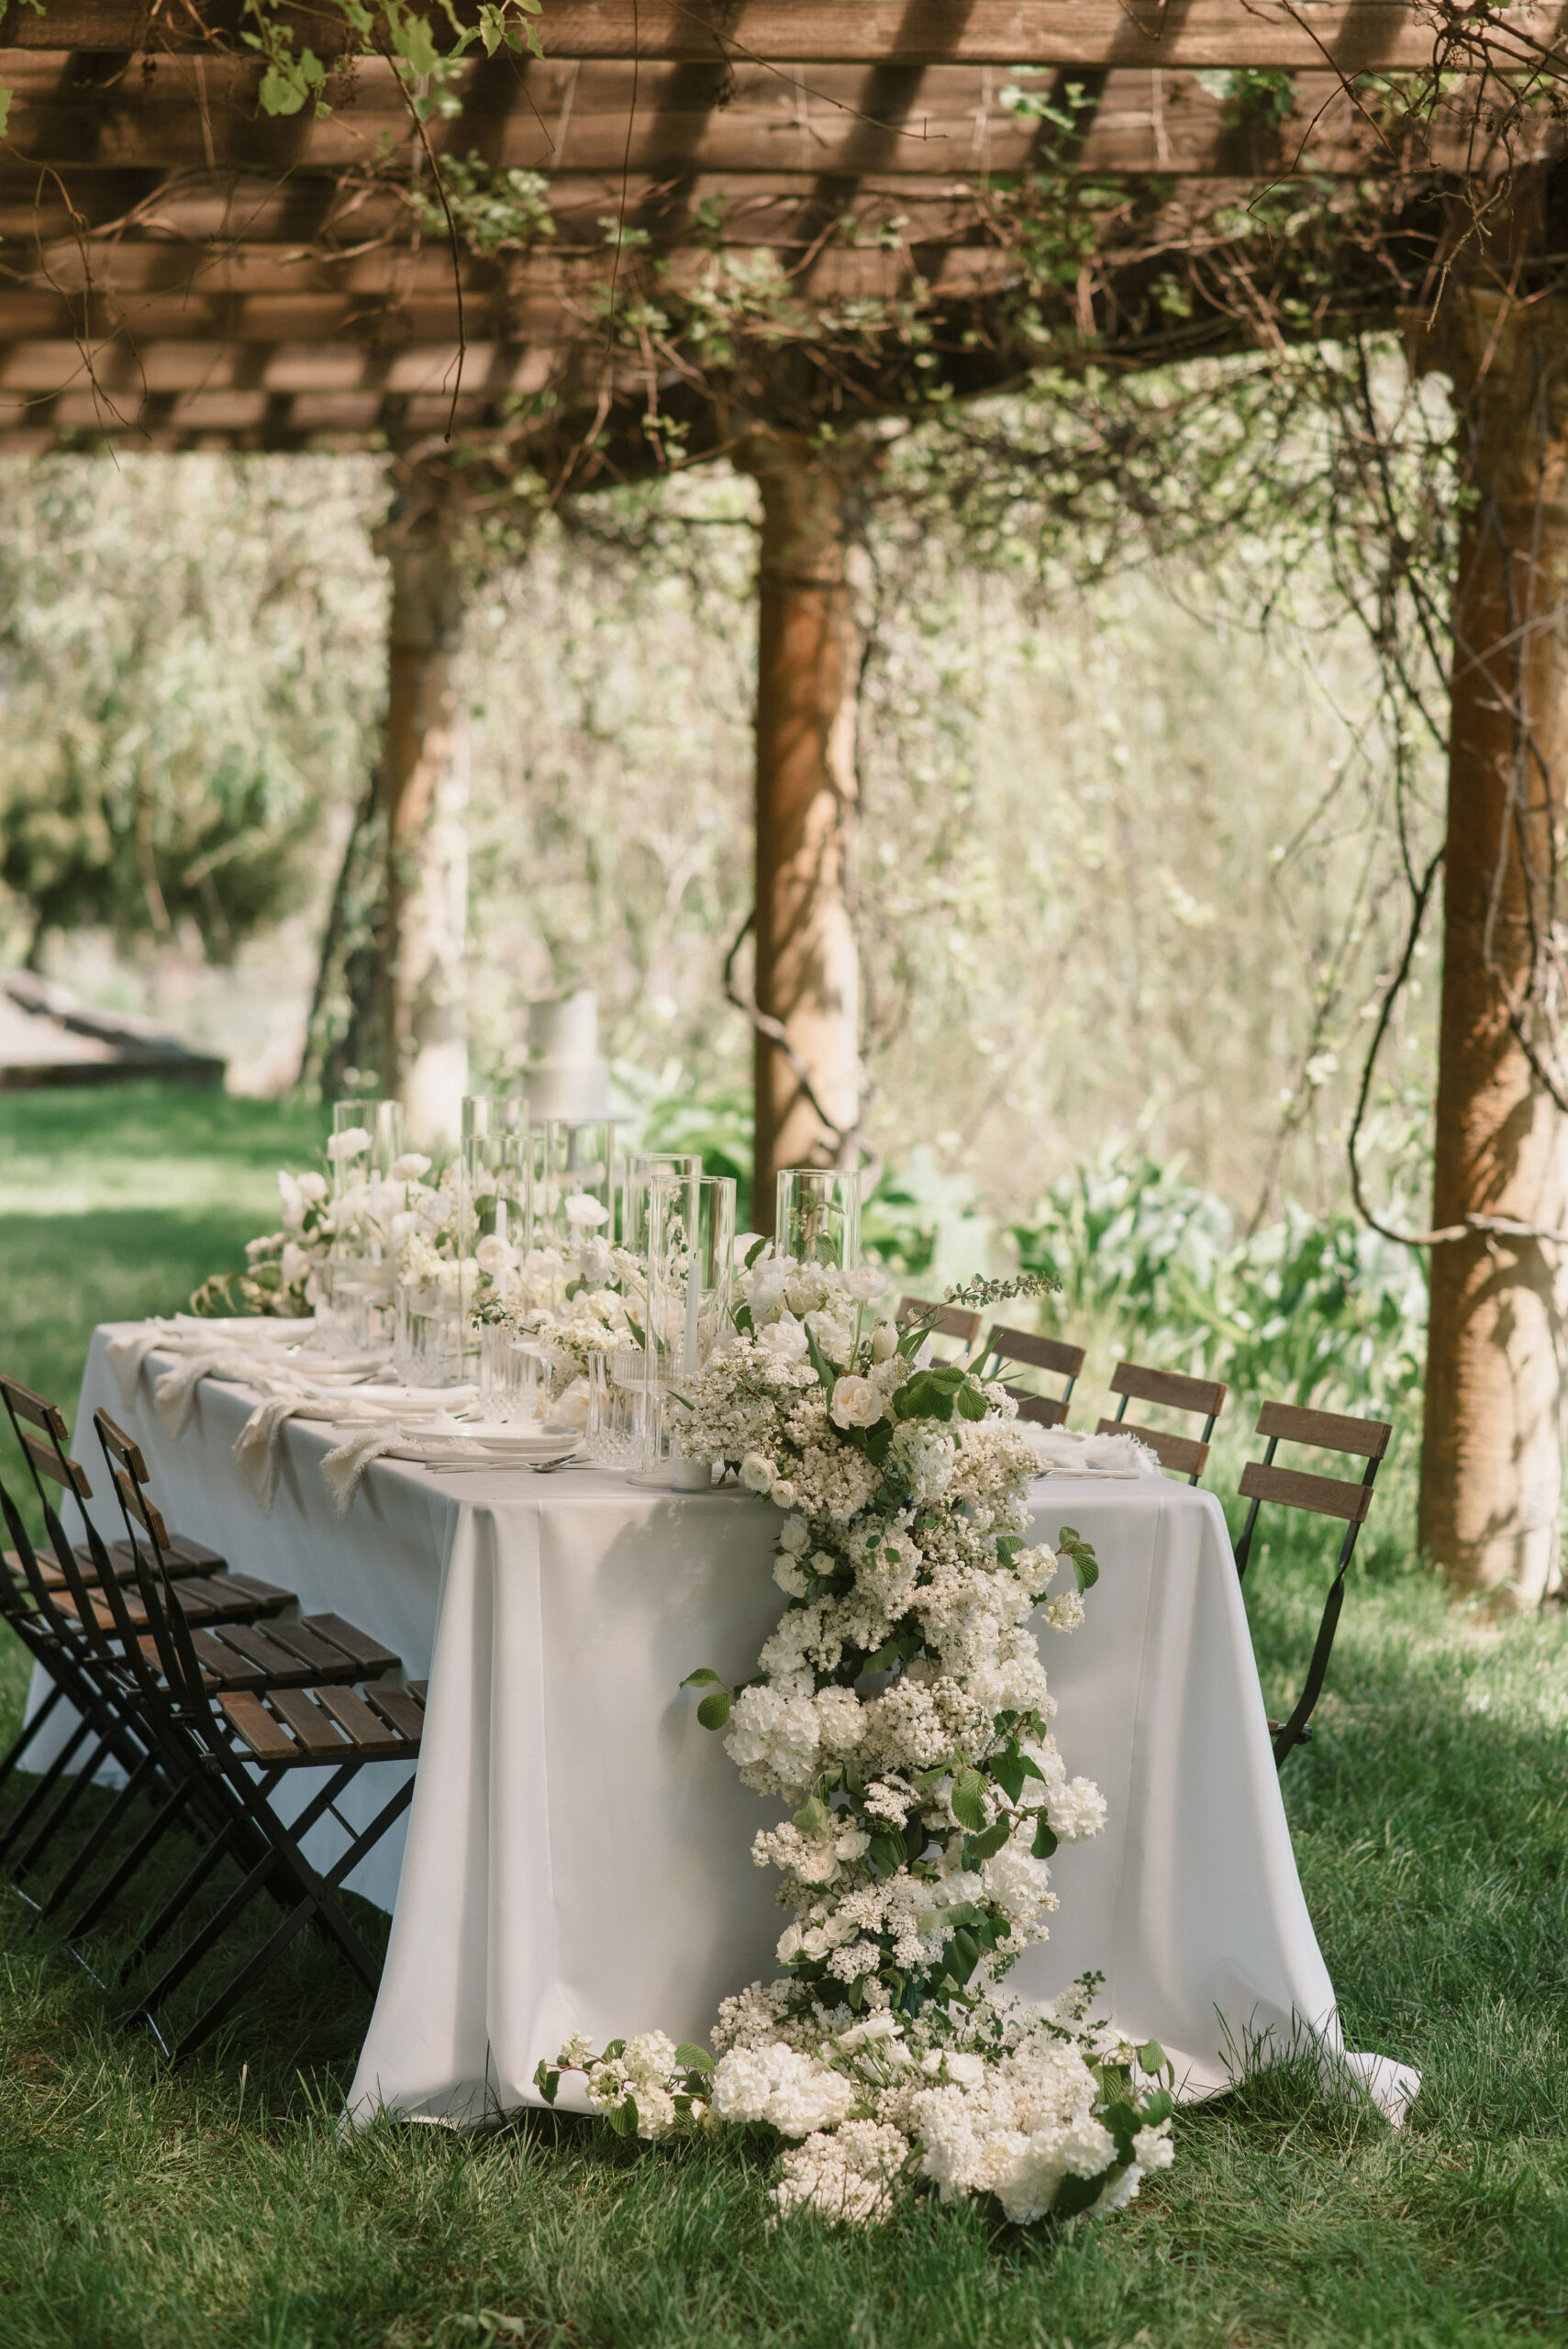 reception table at european-inspired wedding venue 